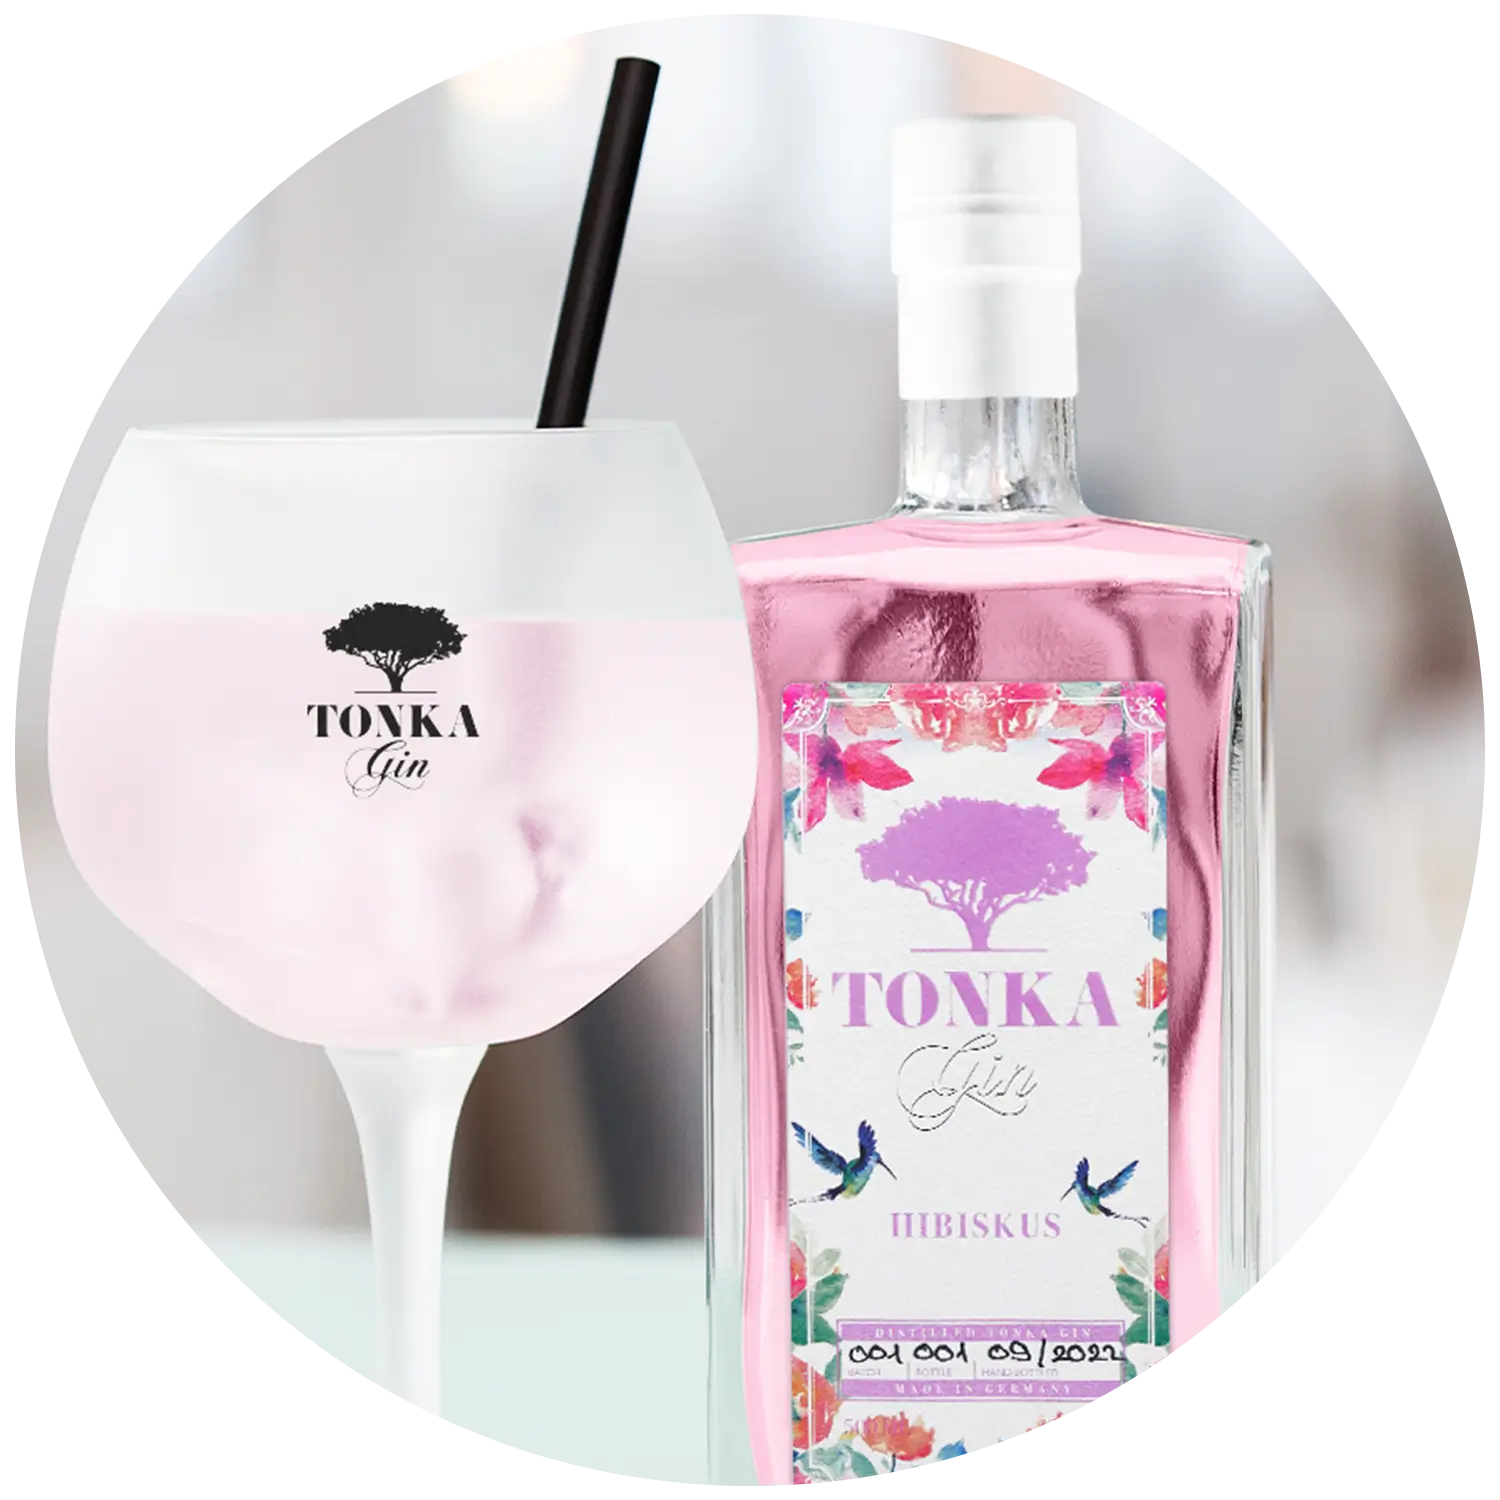 Tonka Gin hibiscus hibiscus Tonka Spirituosenliebhaber bean meets Hibiscus - – flowerGin